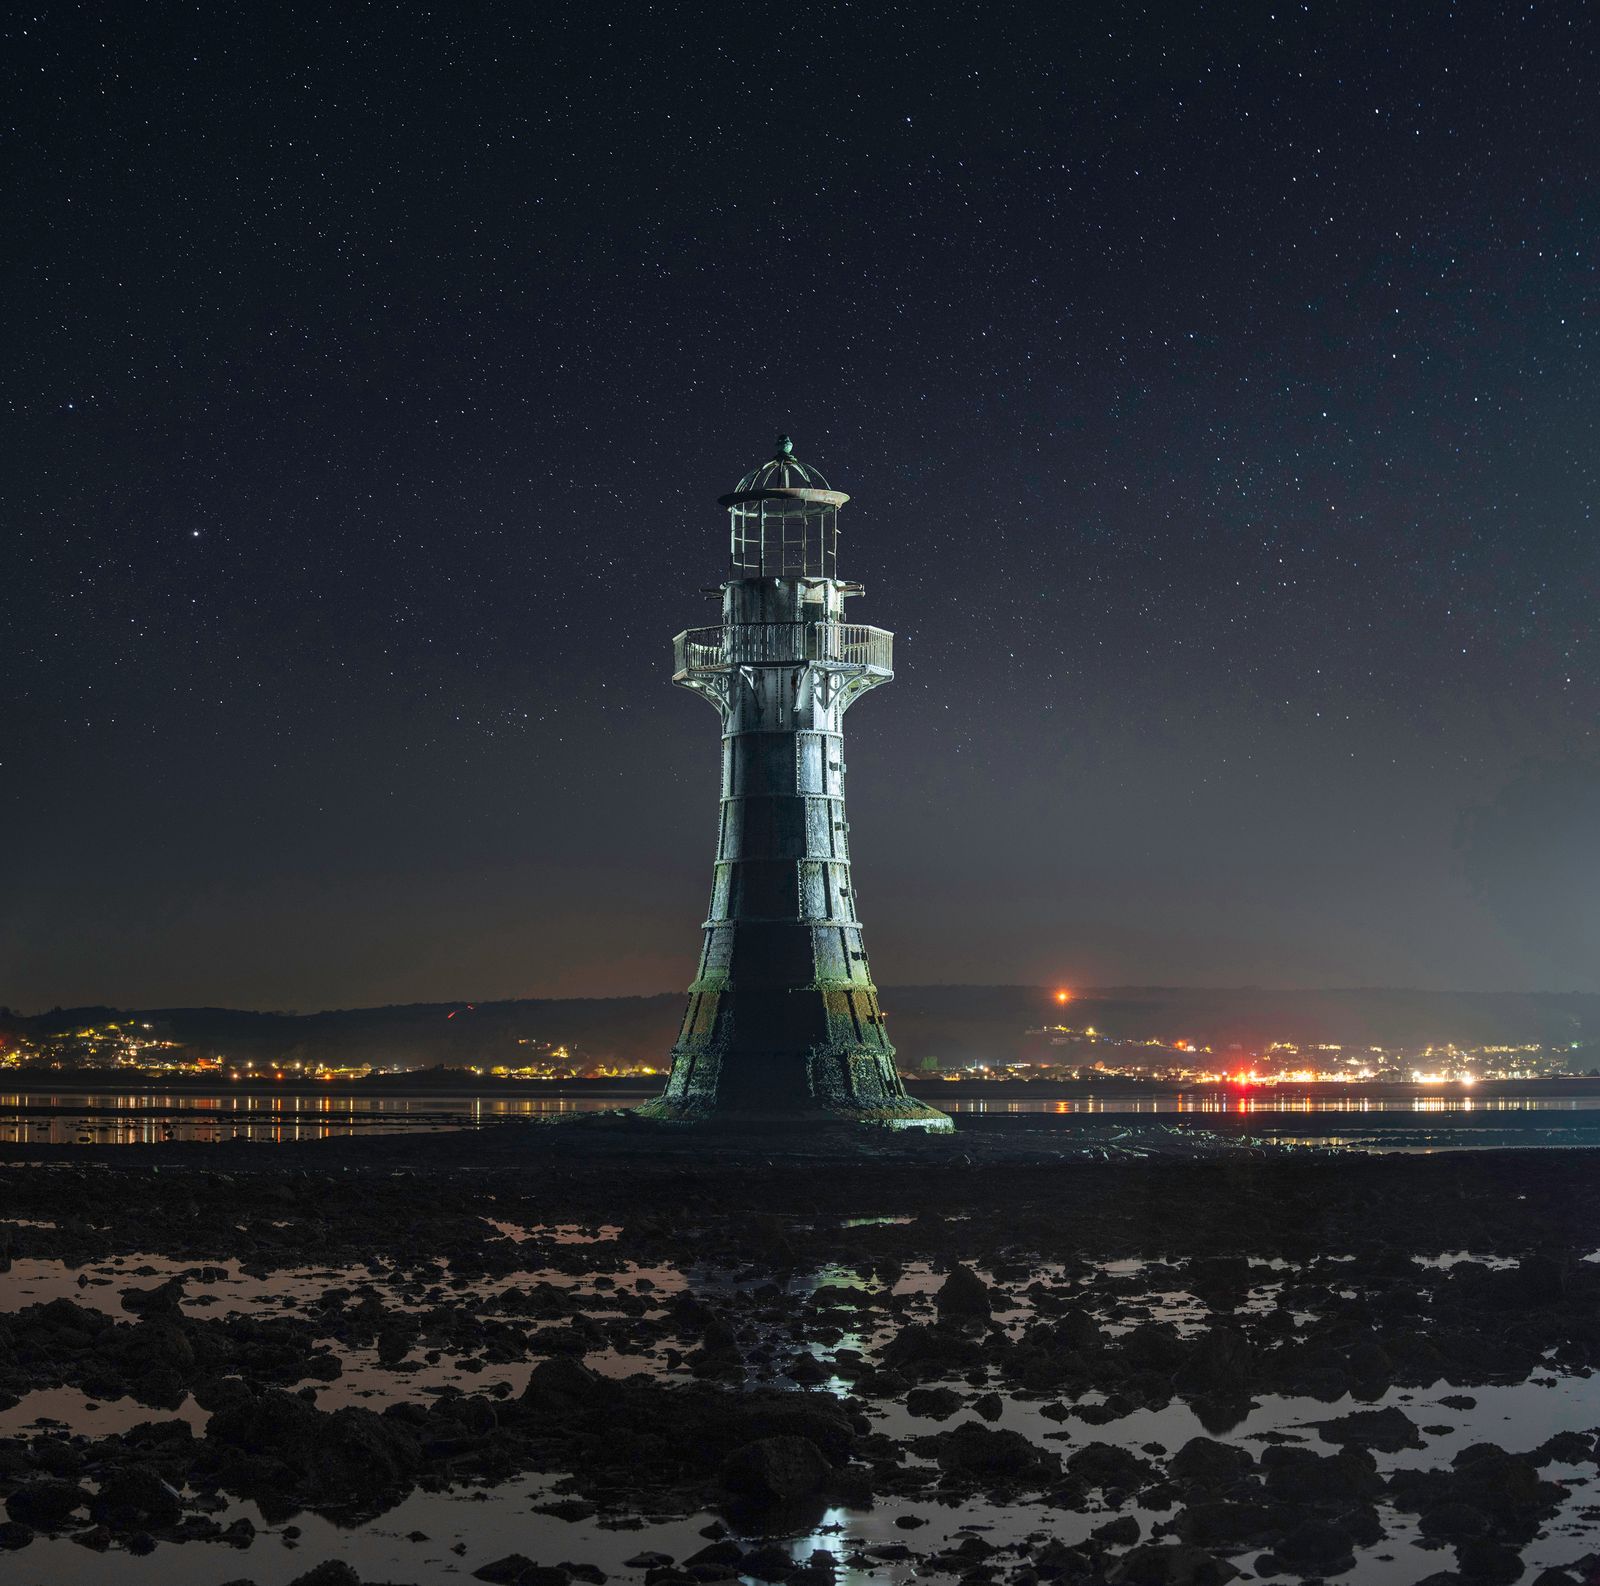 The lightless lighthouse